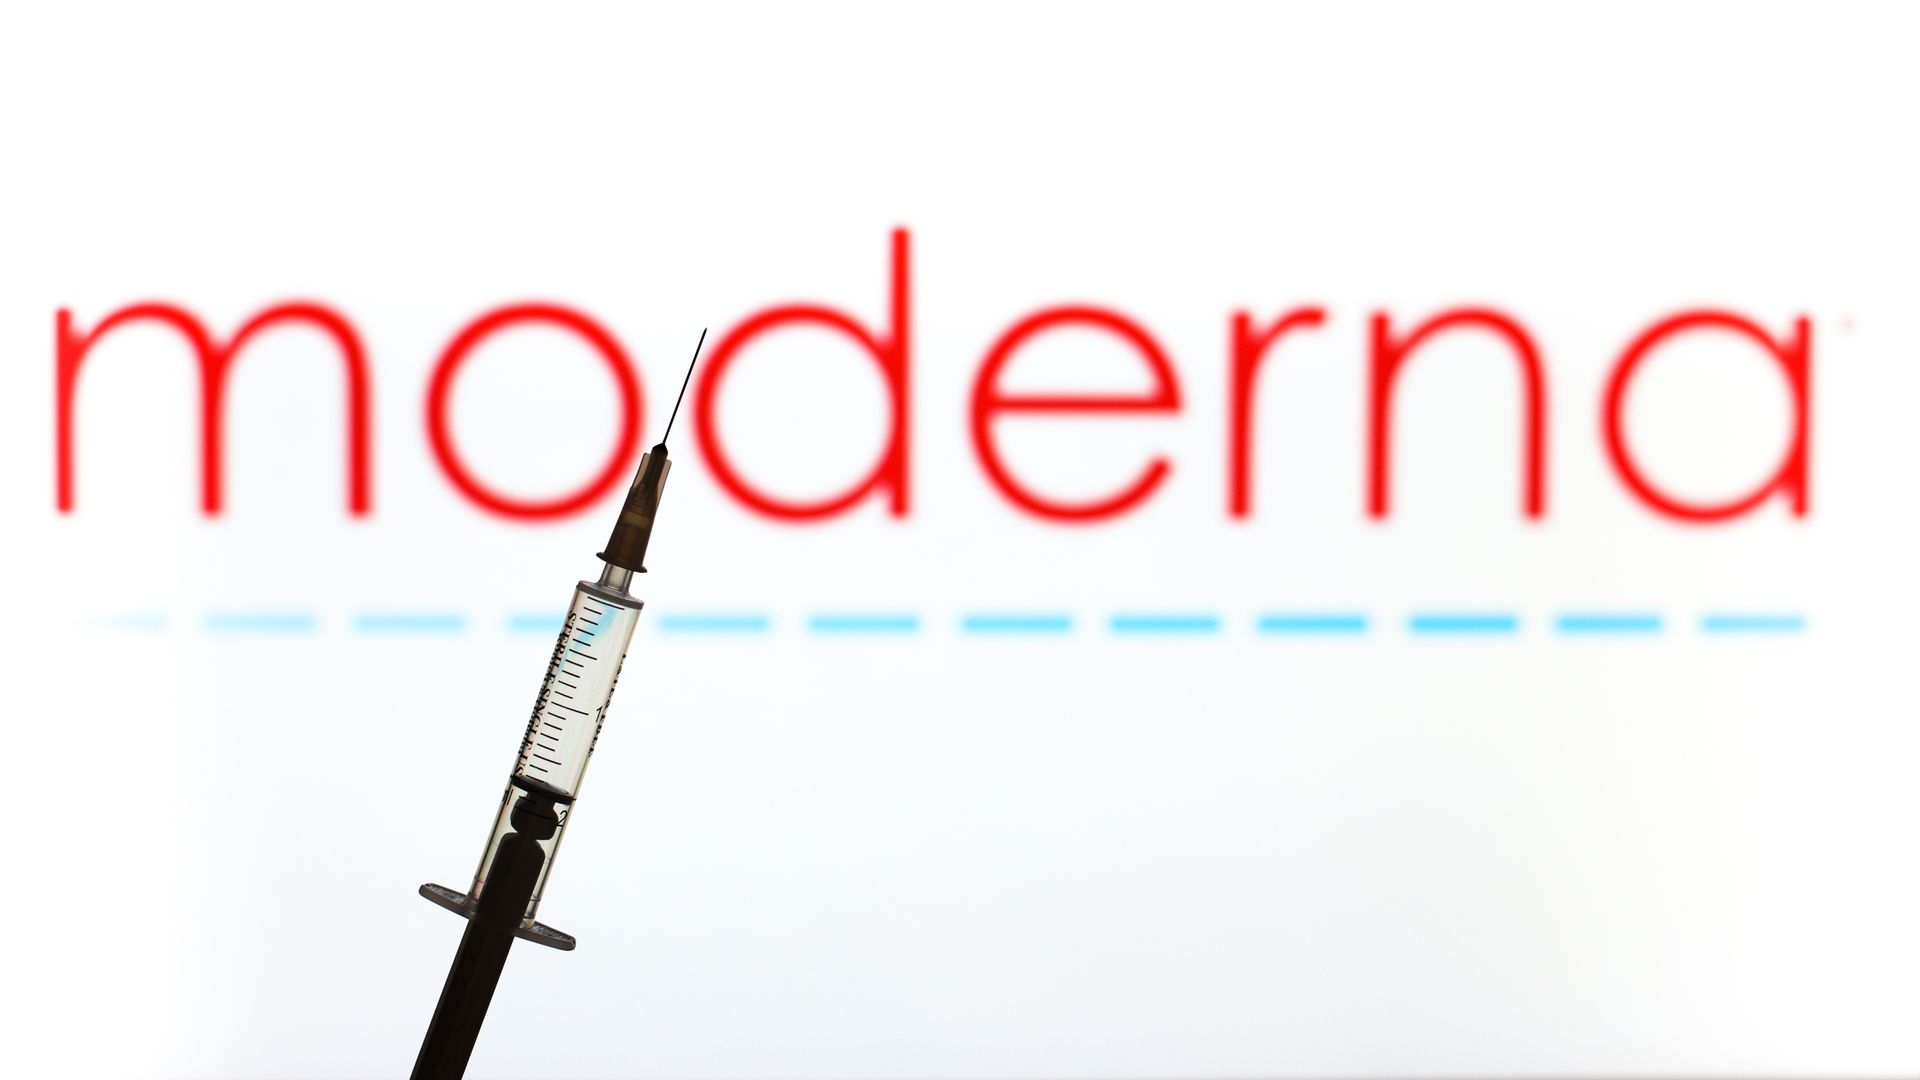 A vaccine syringe against the Moderna logo